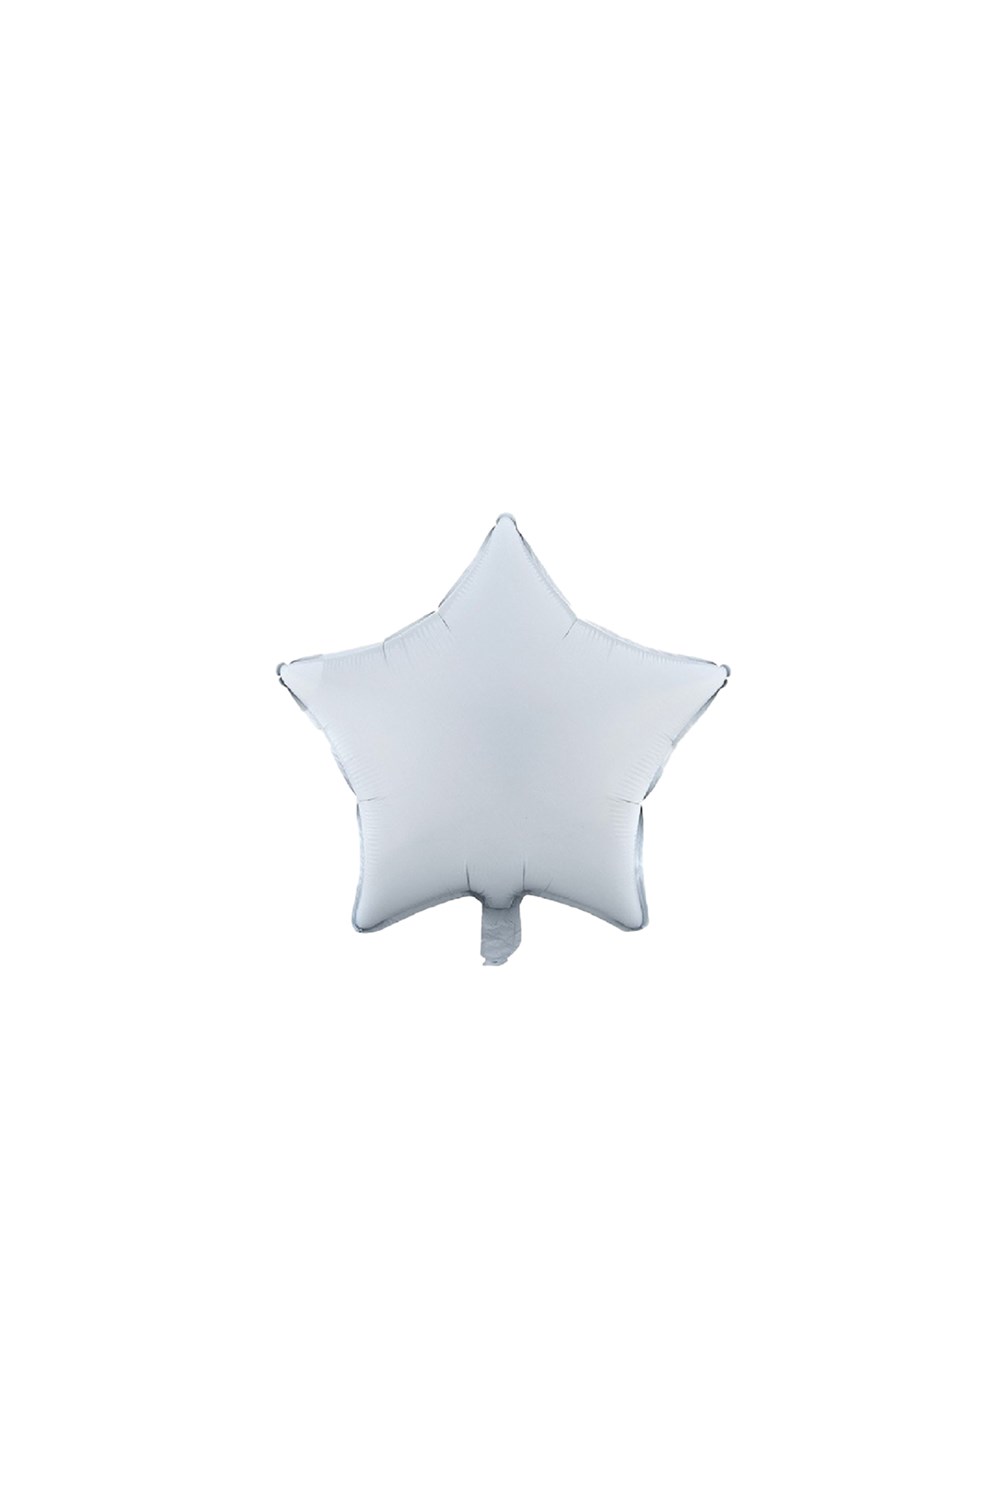 Beyaz Yıldız Folyo Balon 45cmPartistPSPST844